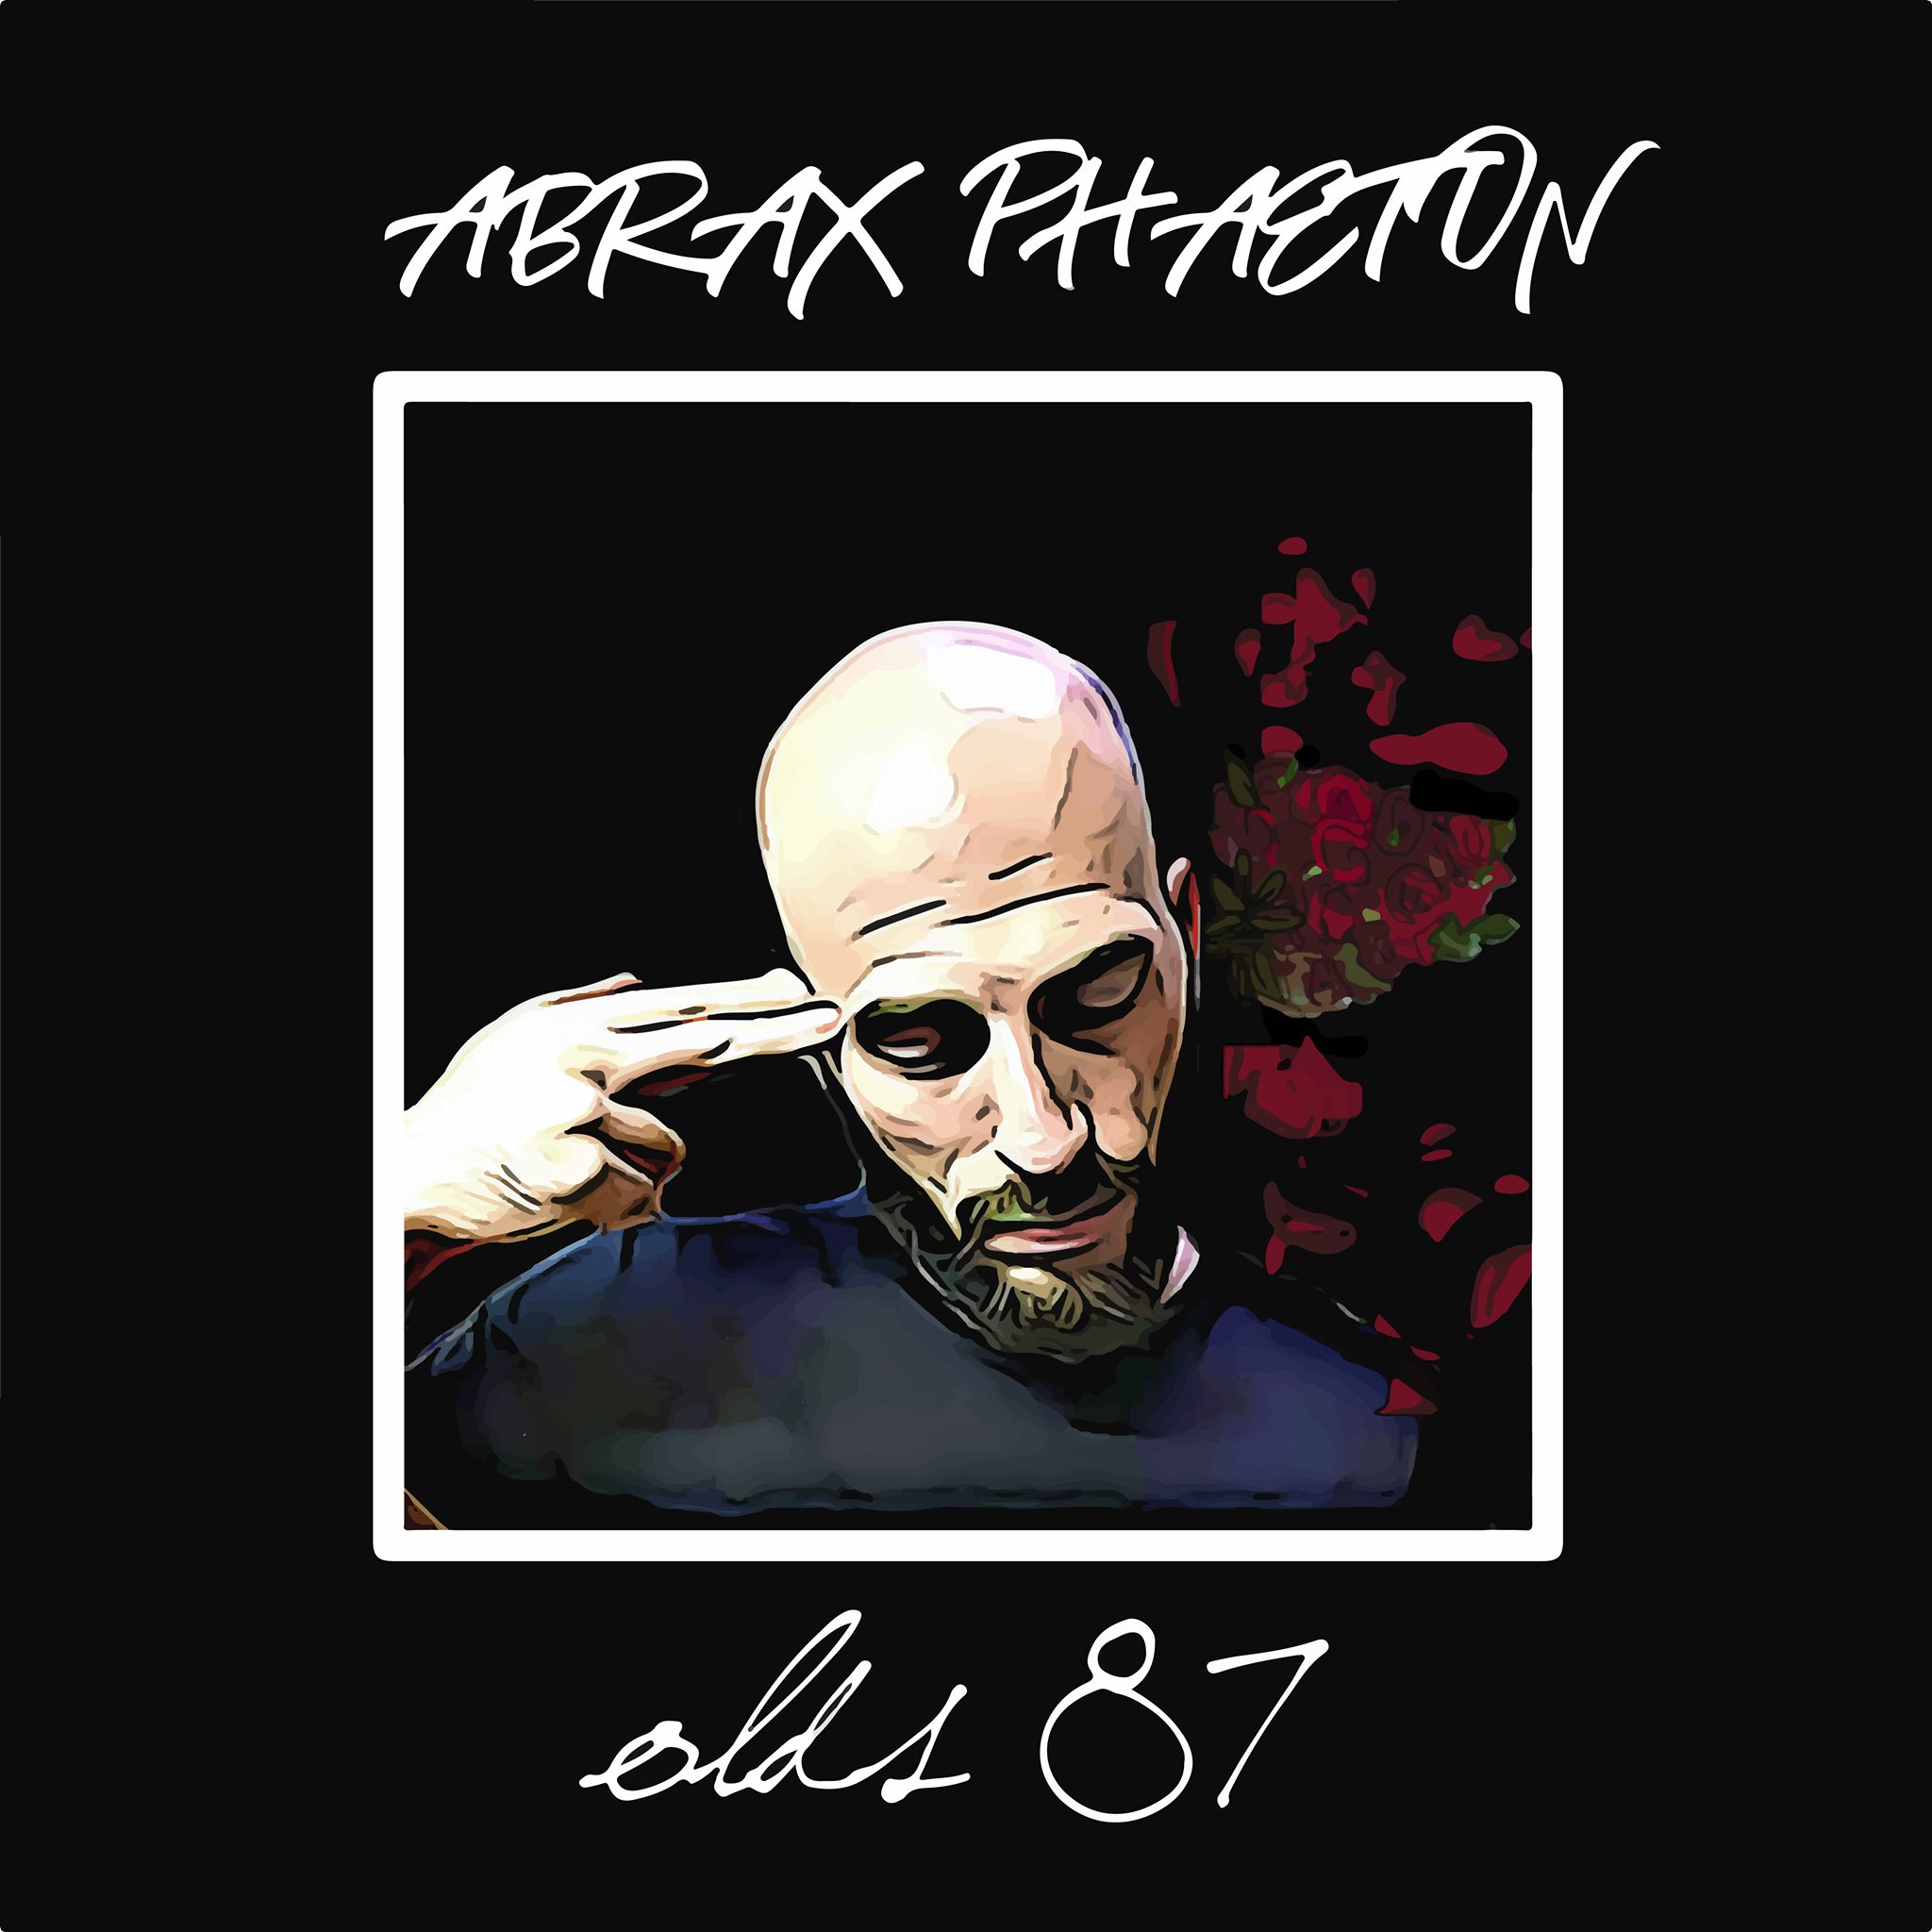 Stream Abrax Phaeton’s ‘Olds 87’ Mixtape